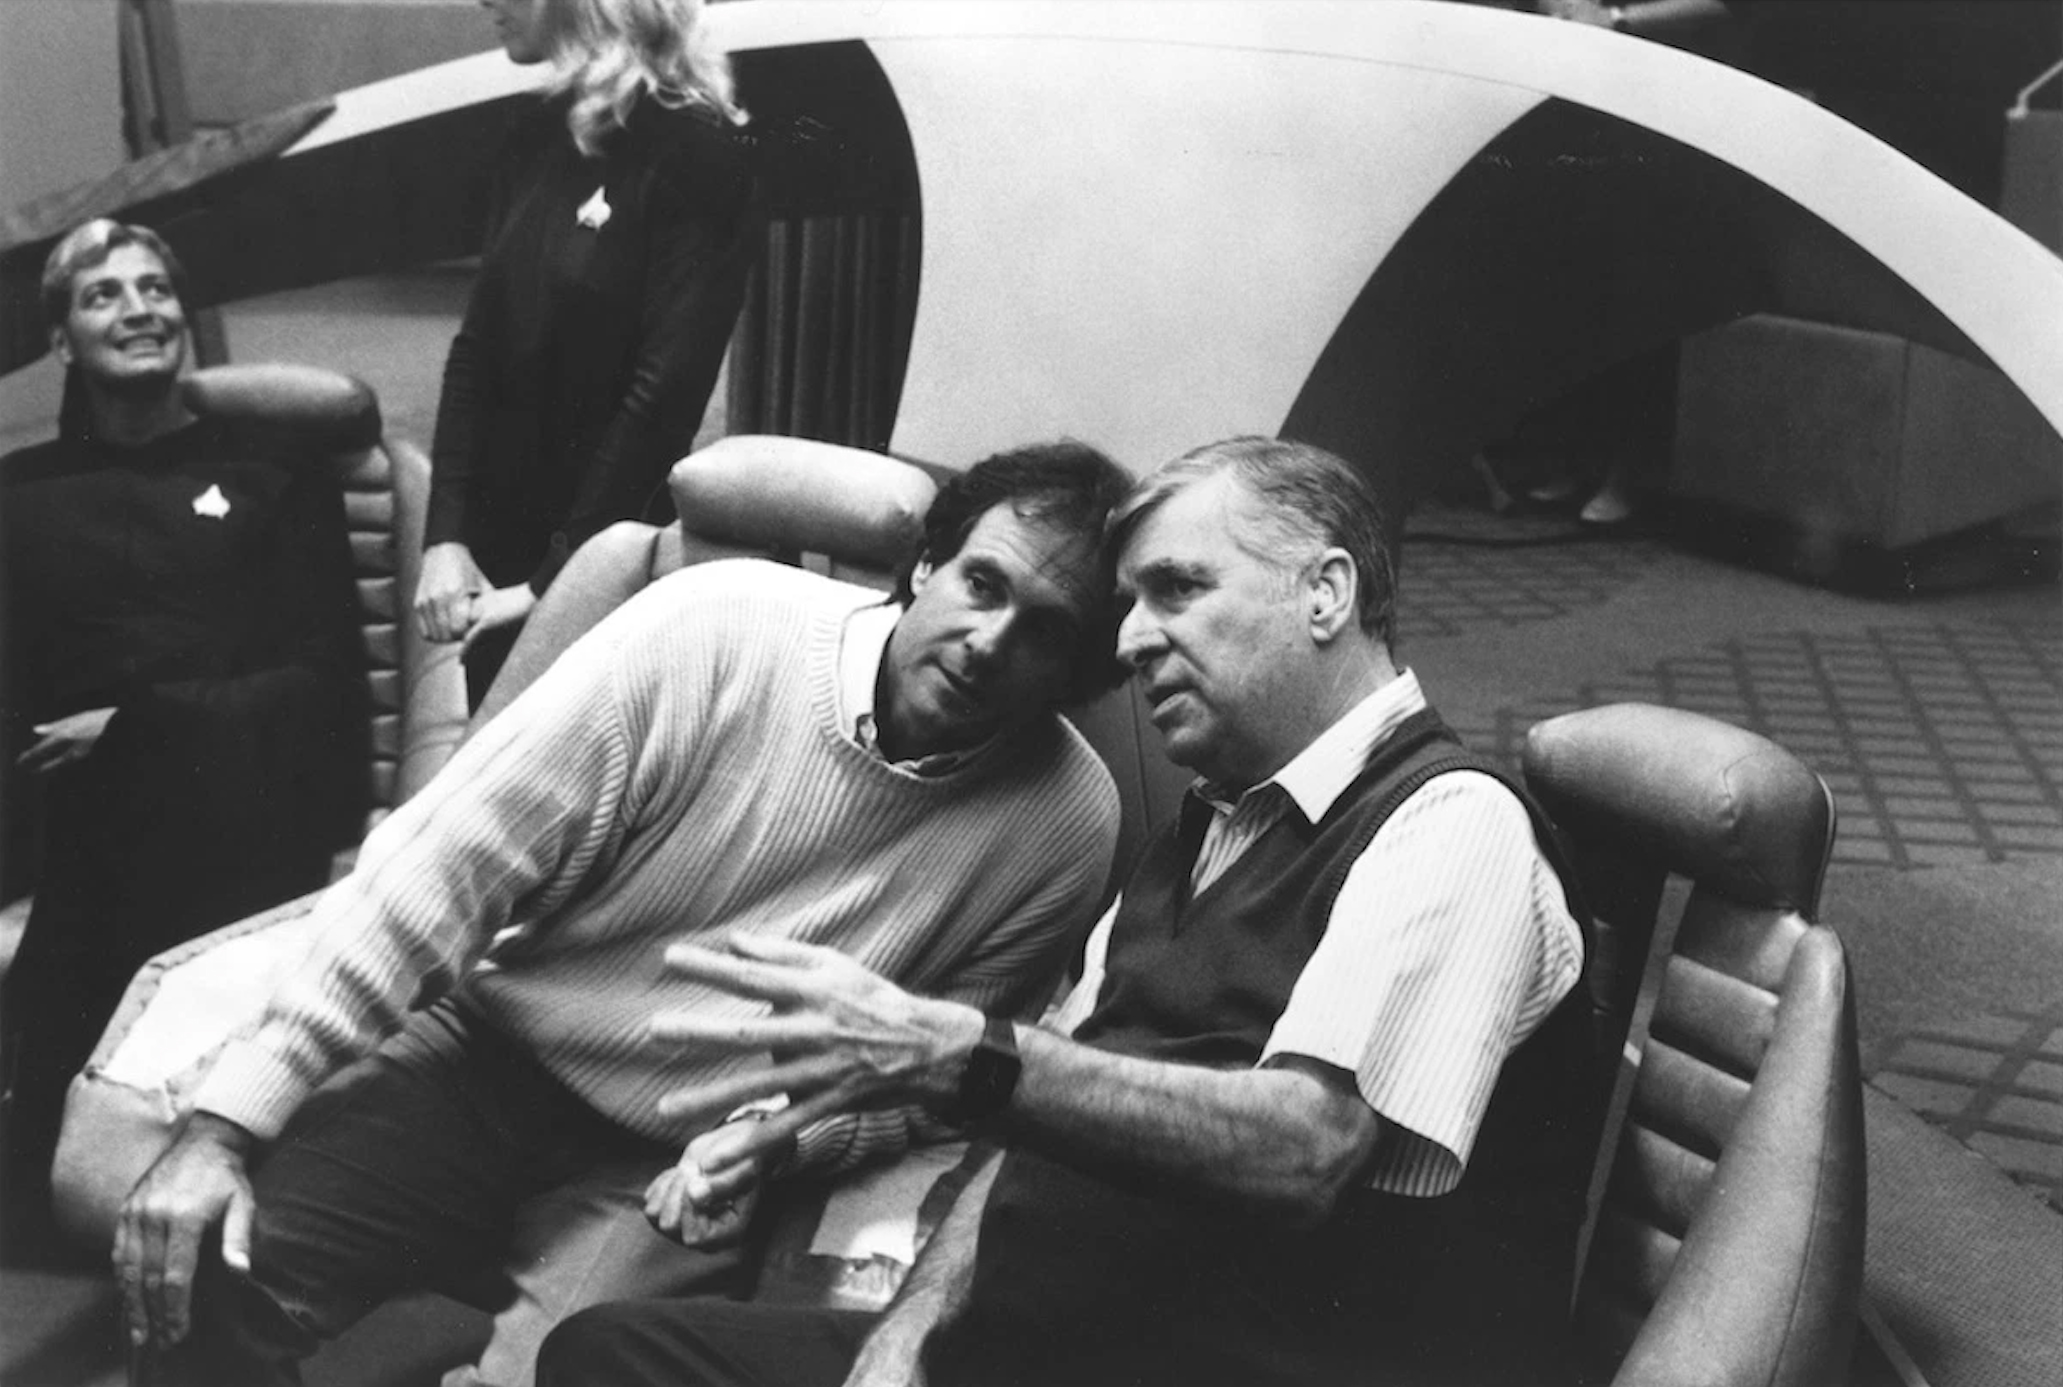 Rick Berman and Gene Roddenberry